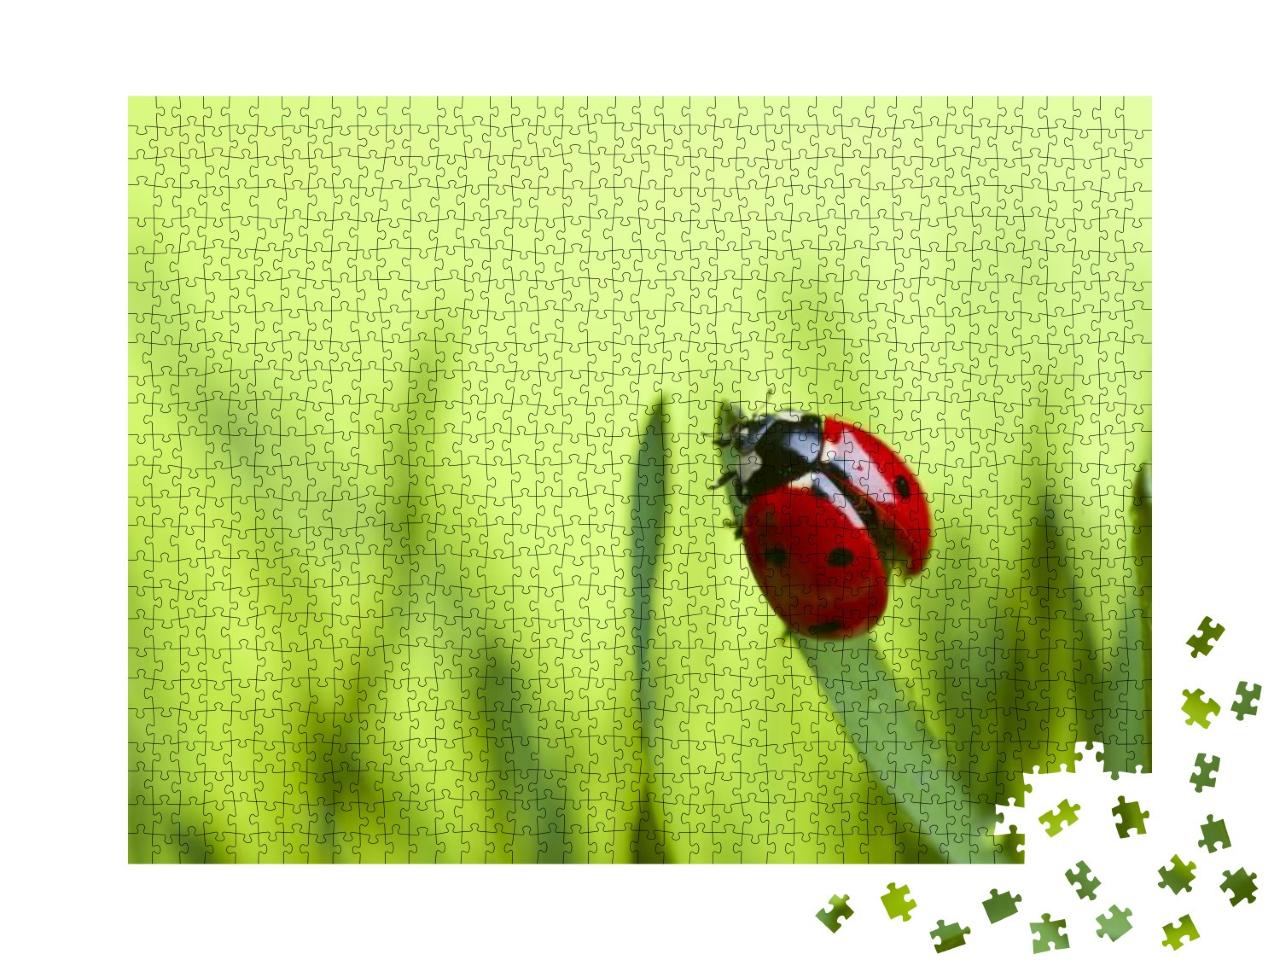 Ladybug on Leaf... Jigsaw Puzzle with 1000 pieces